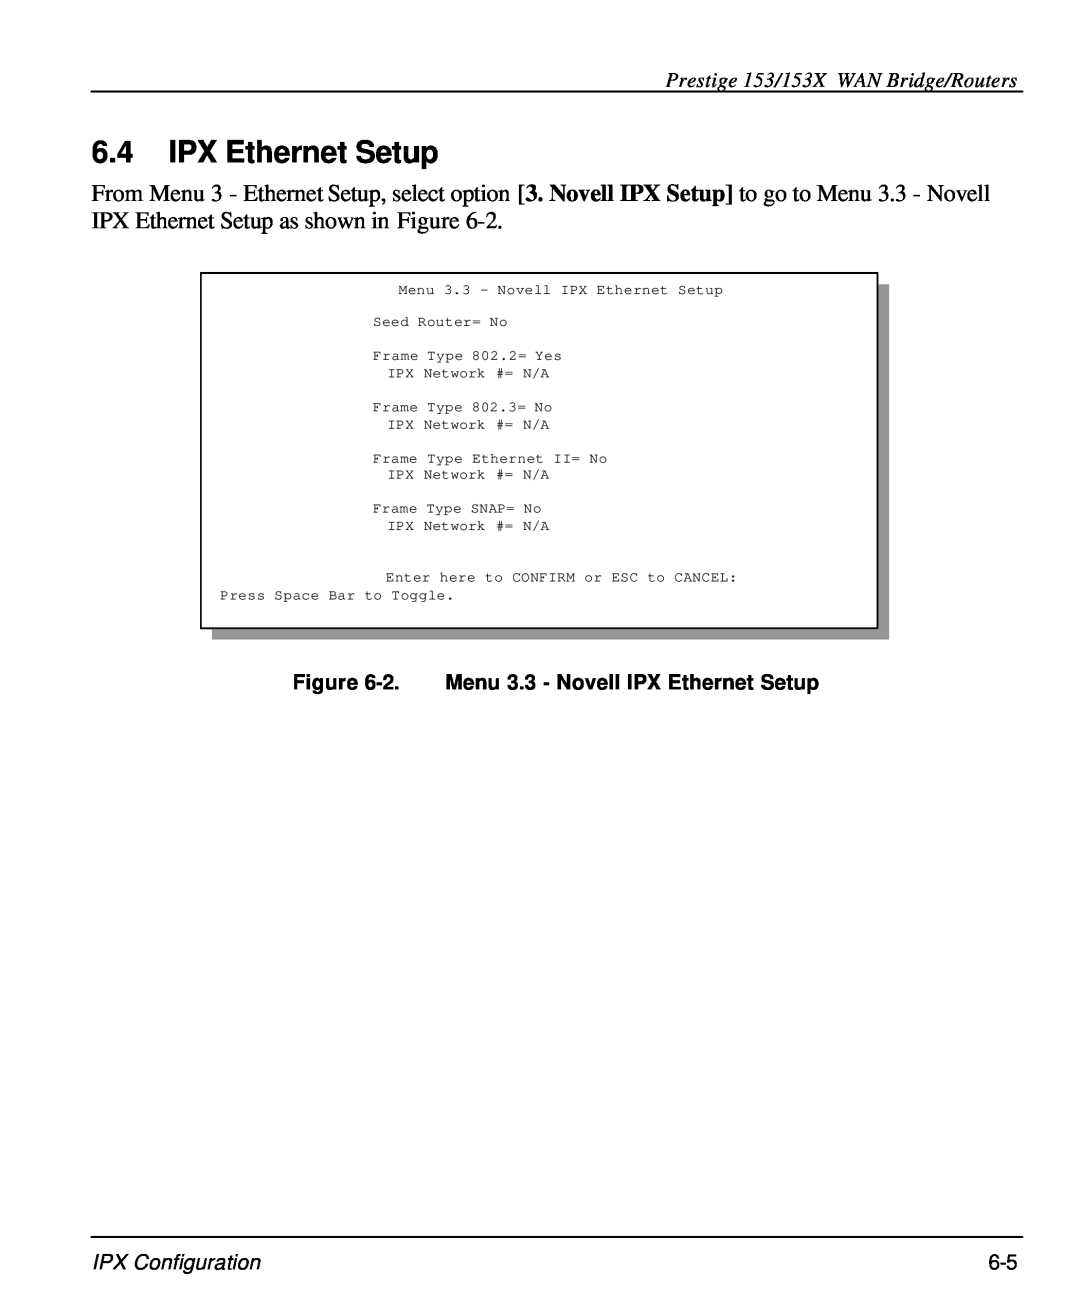 ZyXEL Communications user manual Prestige 153/153X WAN Bridge/Routers, 2. Menu 3.3 - Novell IPX Ethernet Setup 